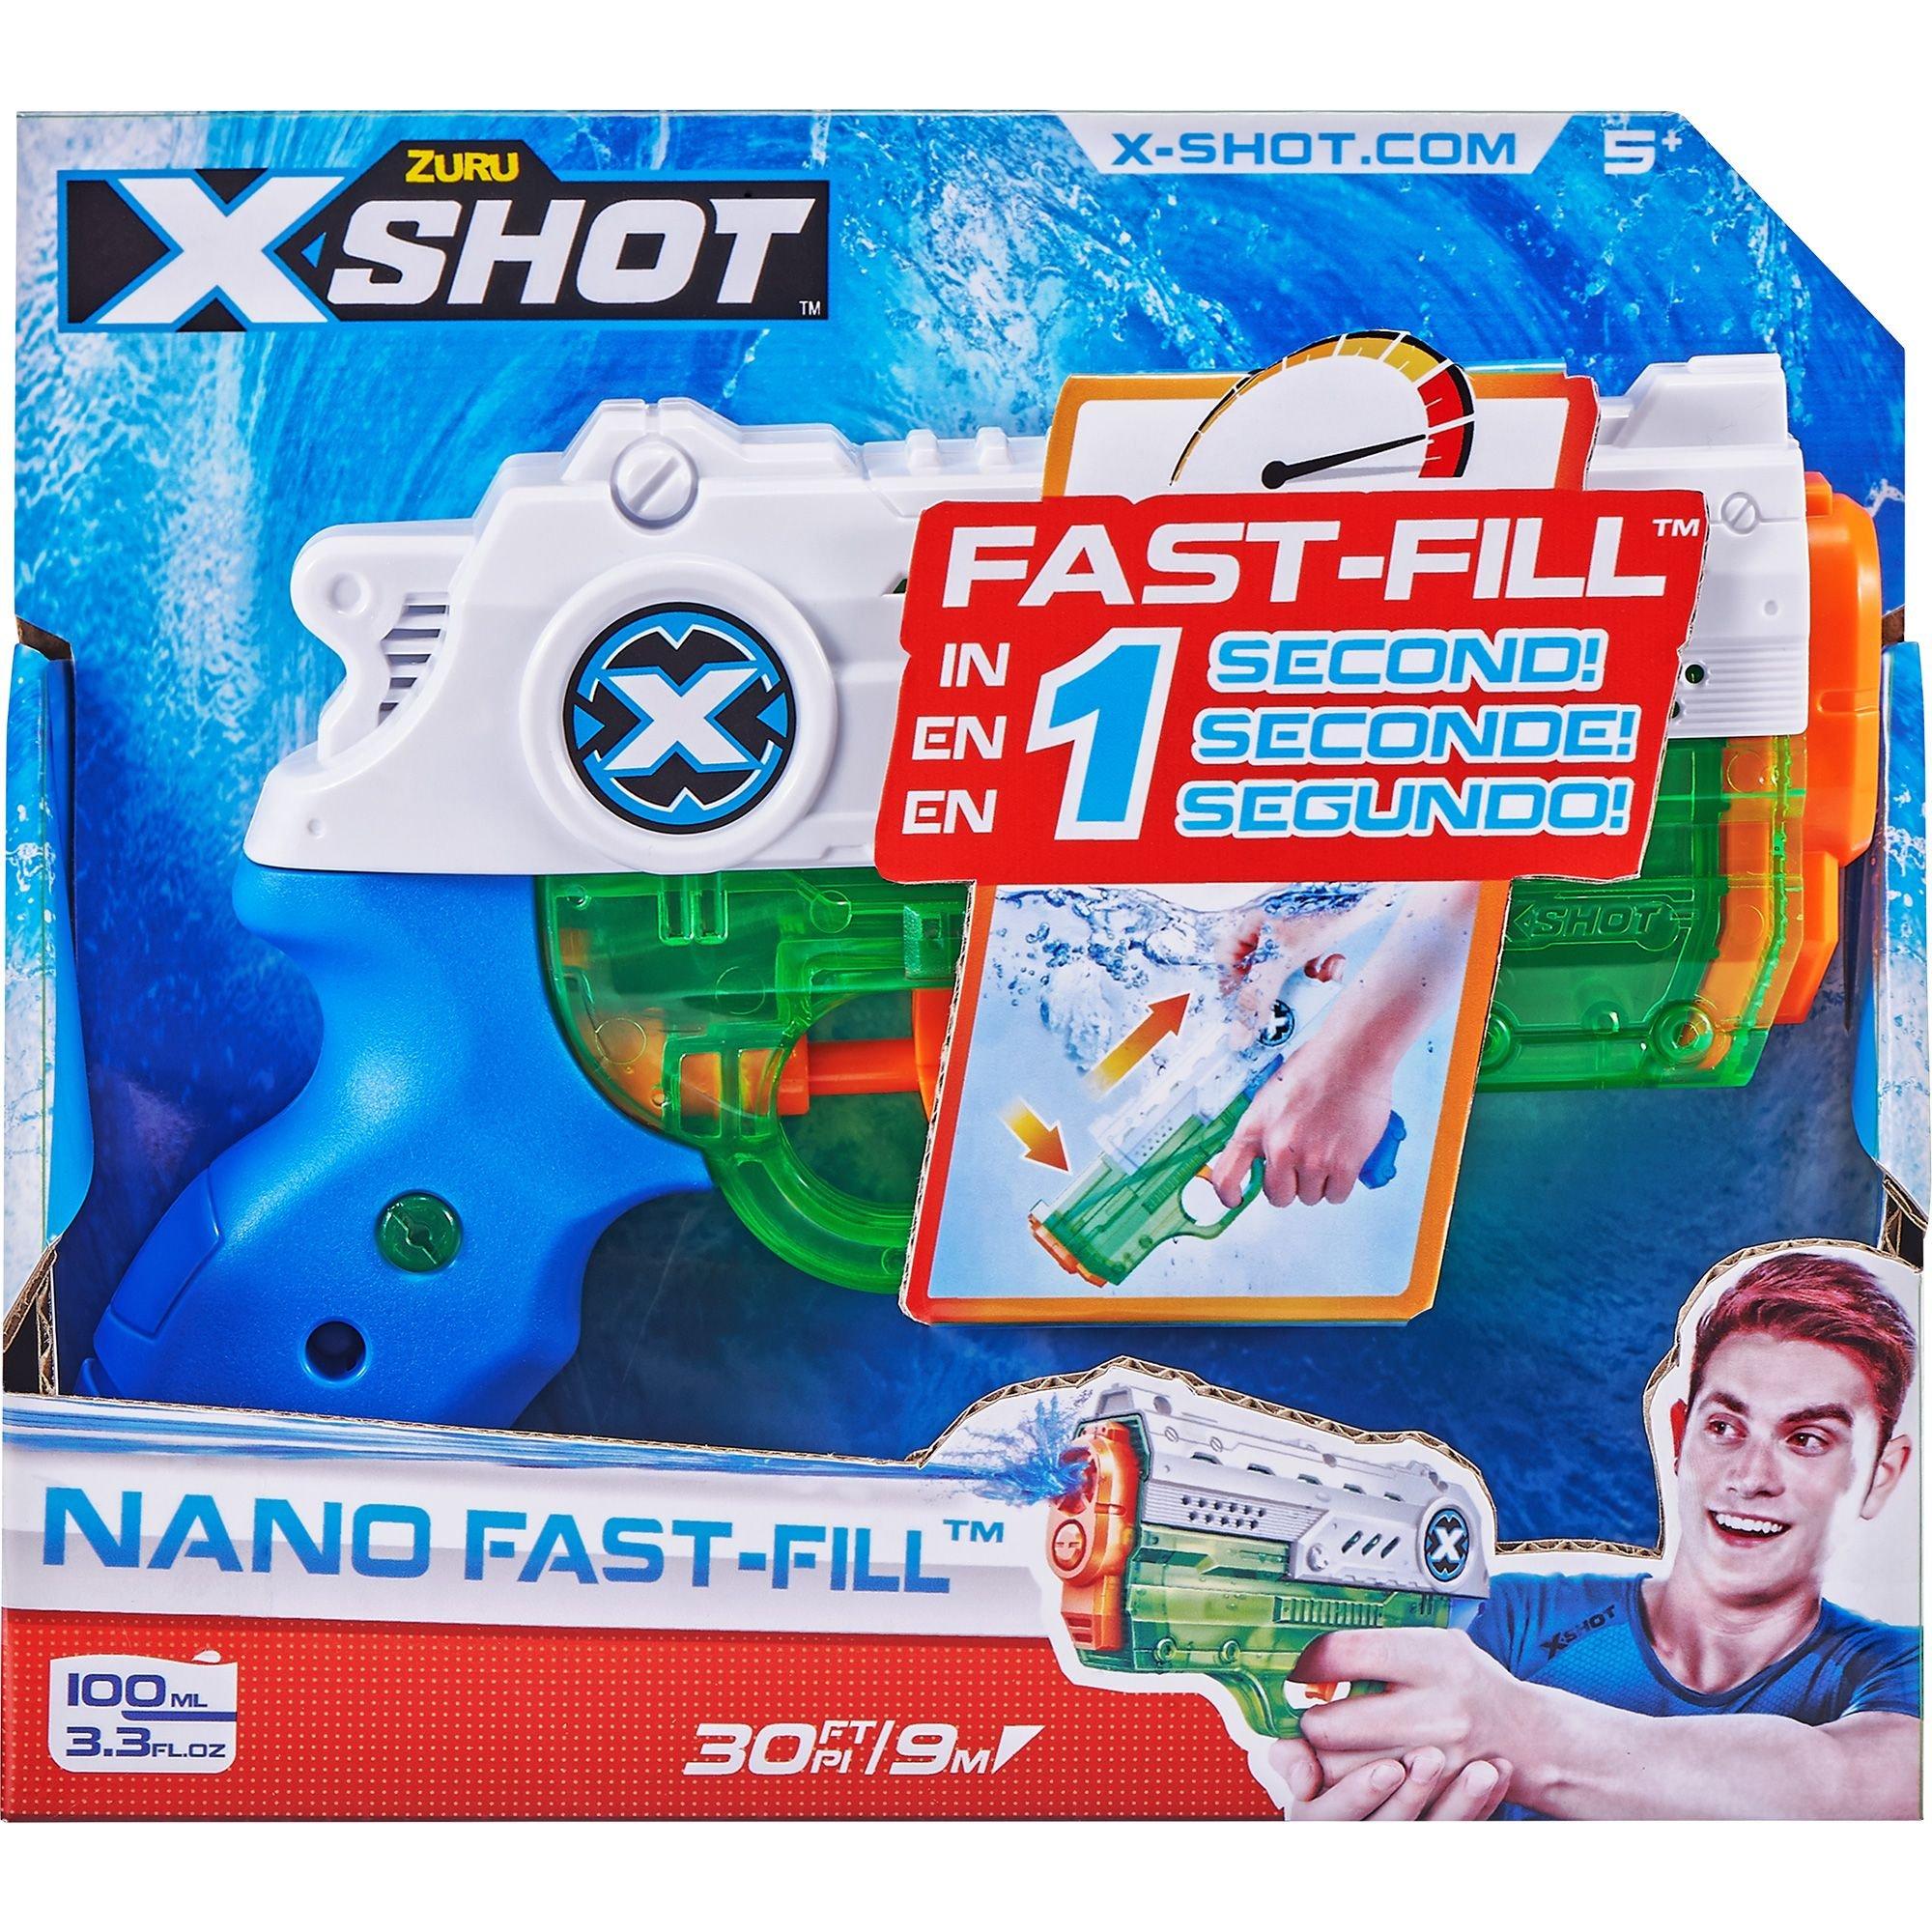 Zuru X-Shot | Party Range 3.3oz, Fast Water Fill 30ft City Blaster